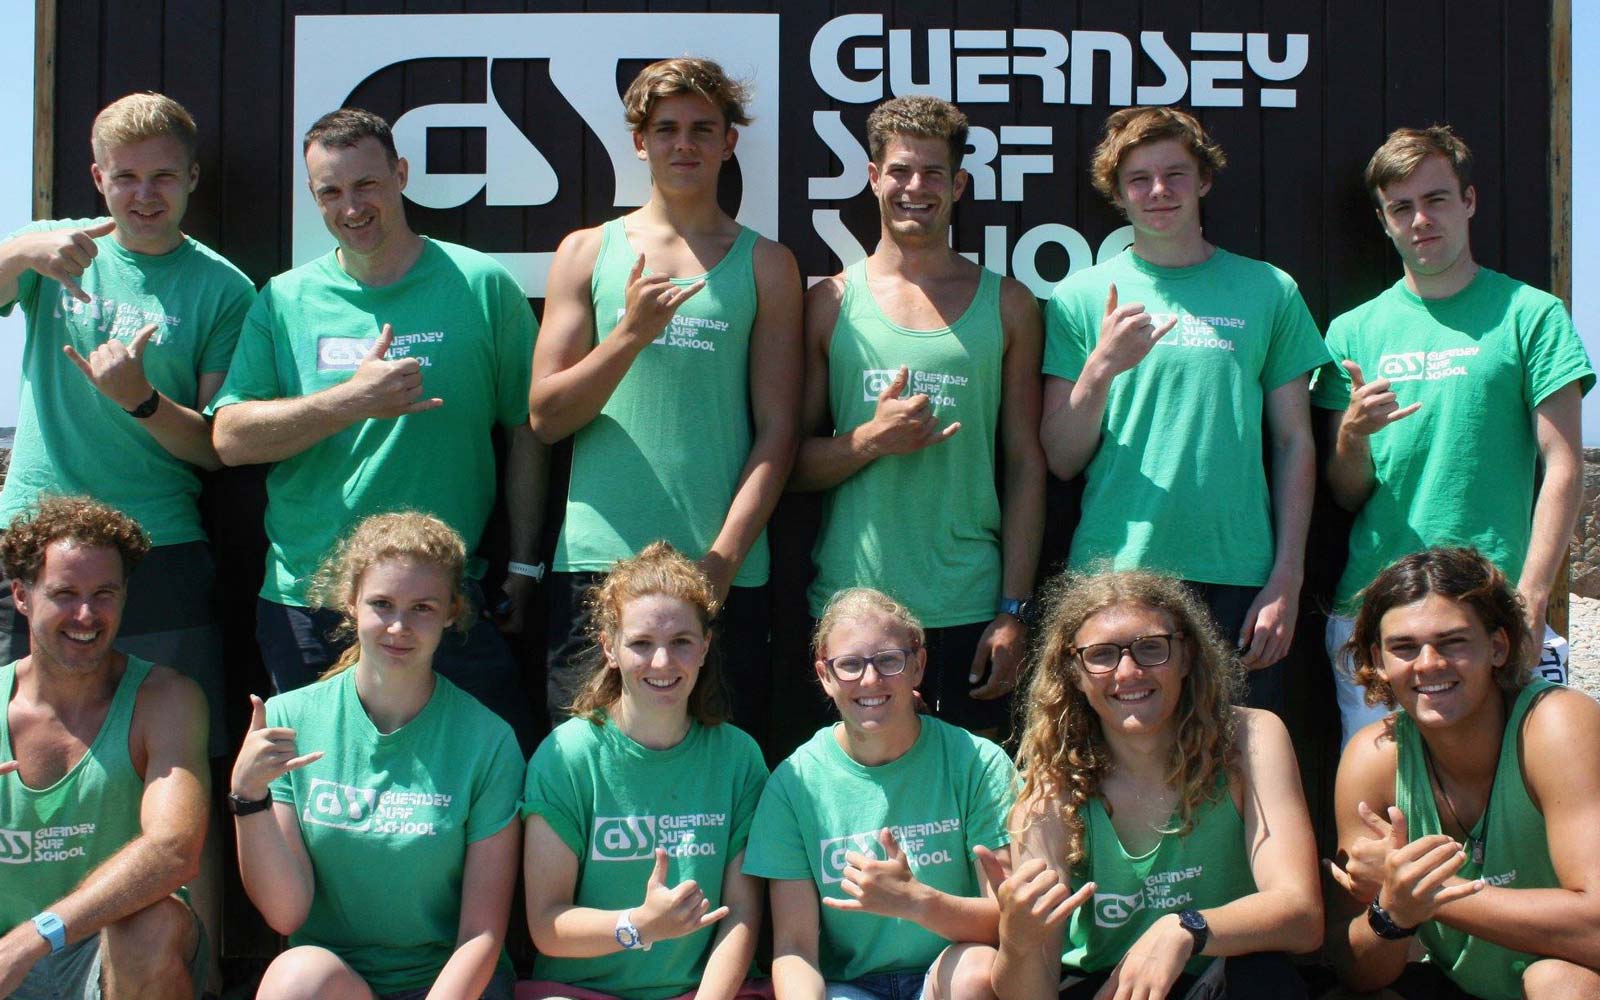 Meet the team at the Guernsey Surf School